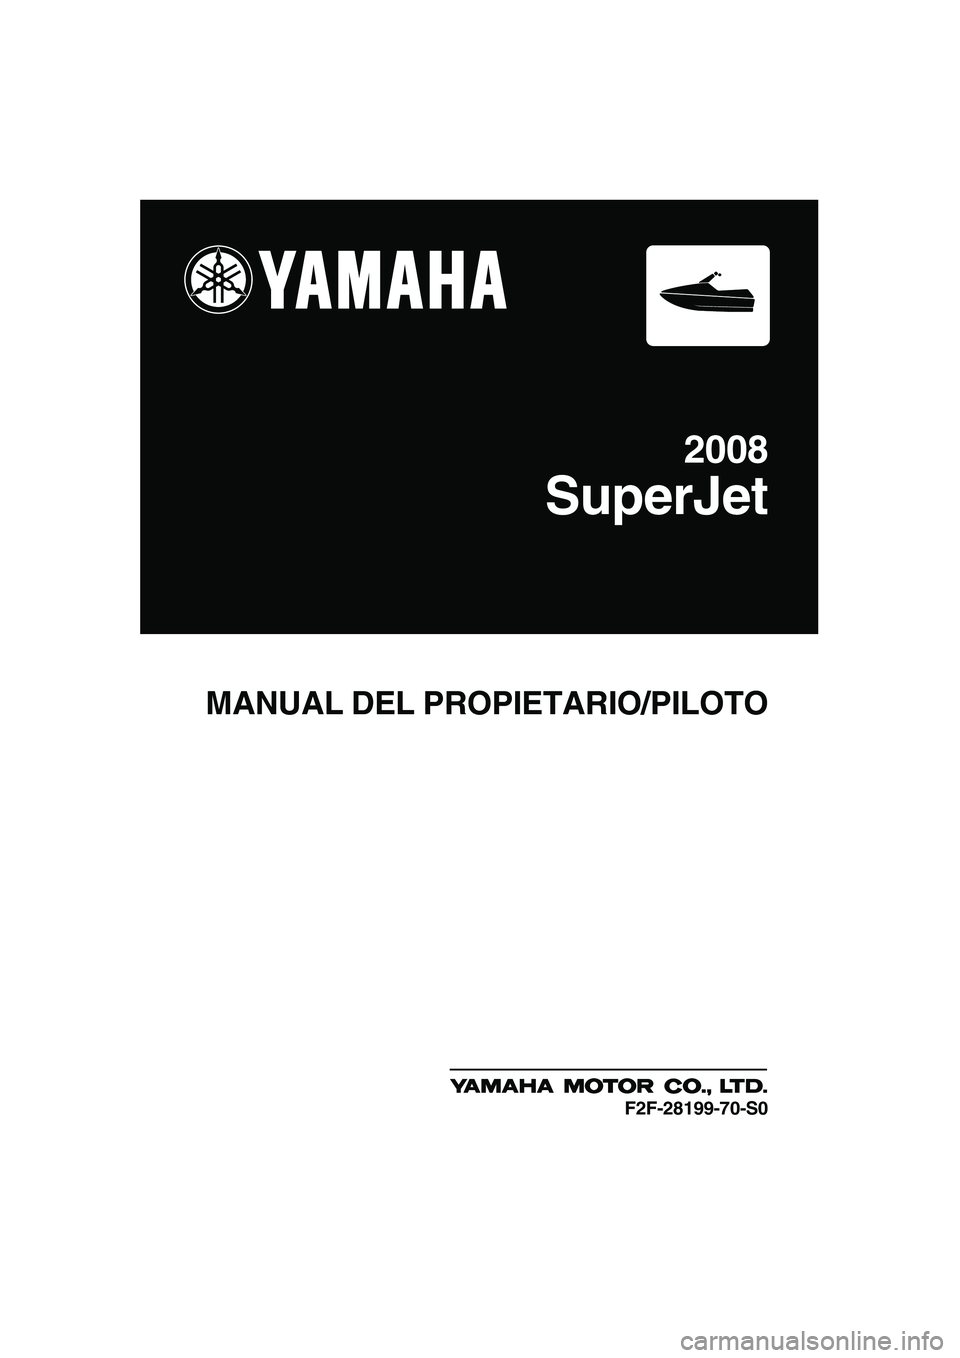 YAMAHA SUPERJET 2008  Manuale de Empleo (in Spanish) MANUAL DEL PROPIETARIO/PILOTO
2008
SuperJet
F2F-28199-70-S0
UF2F70S0.book  Page 1  Tuesday, April 17, 2007  10:07 AM 